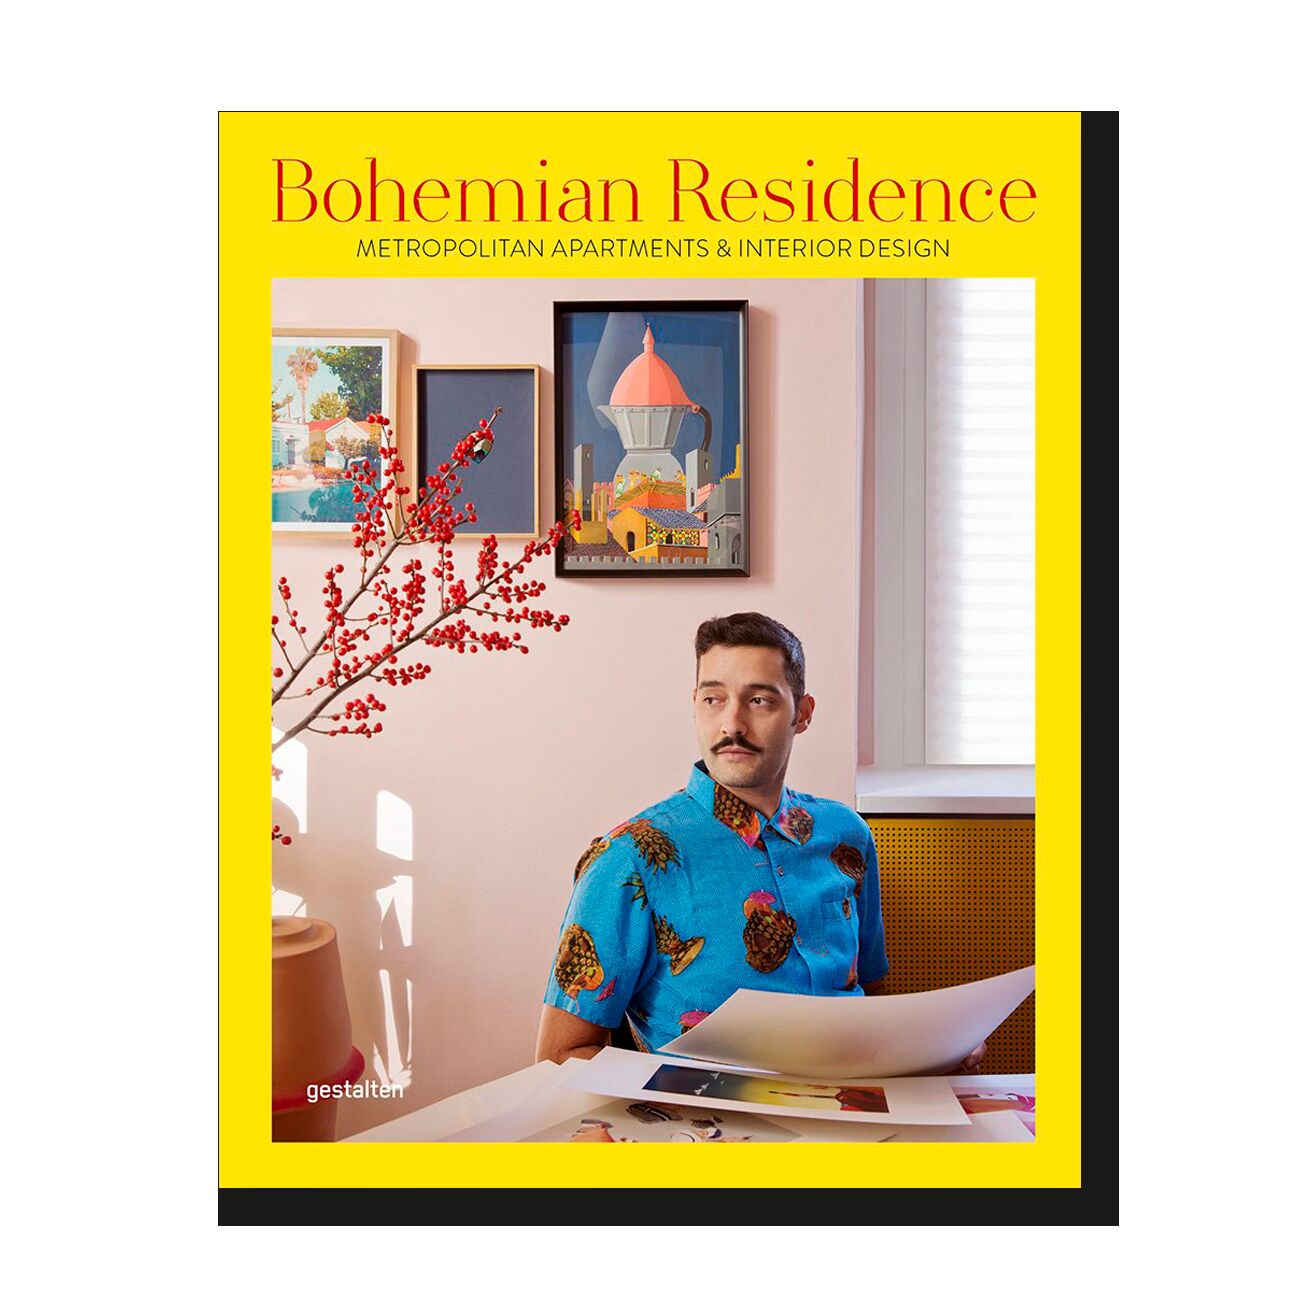 Bohemian Residence: Metropolitan Apartments and Interior Design